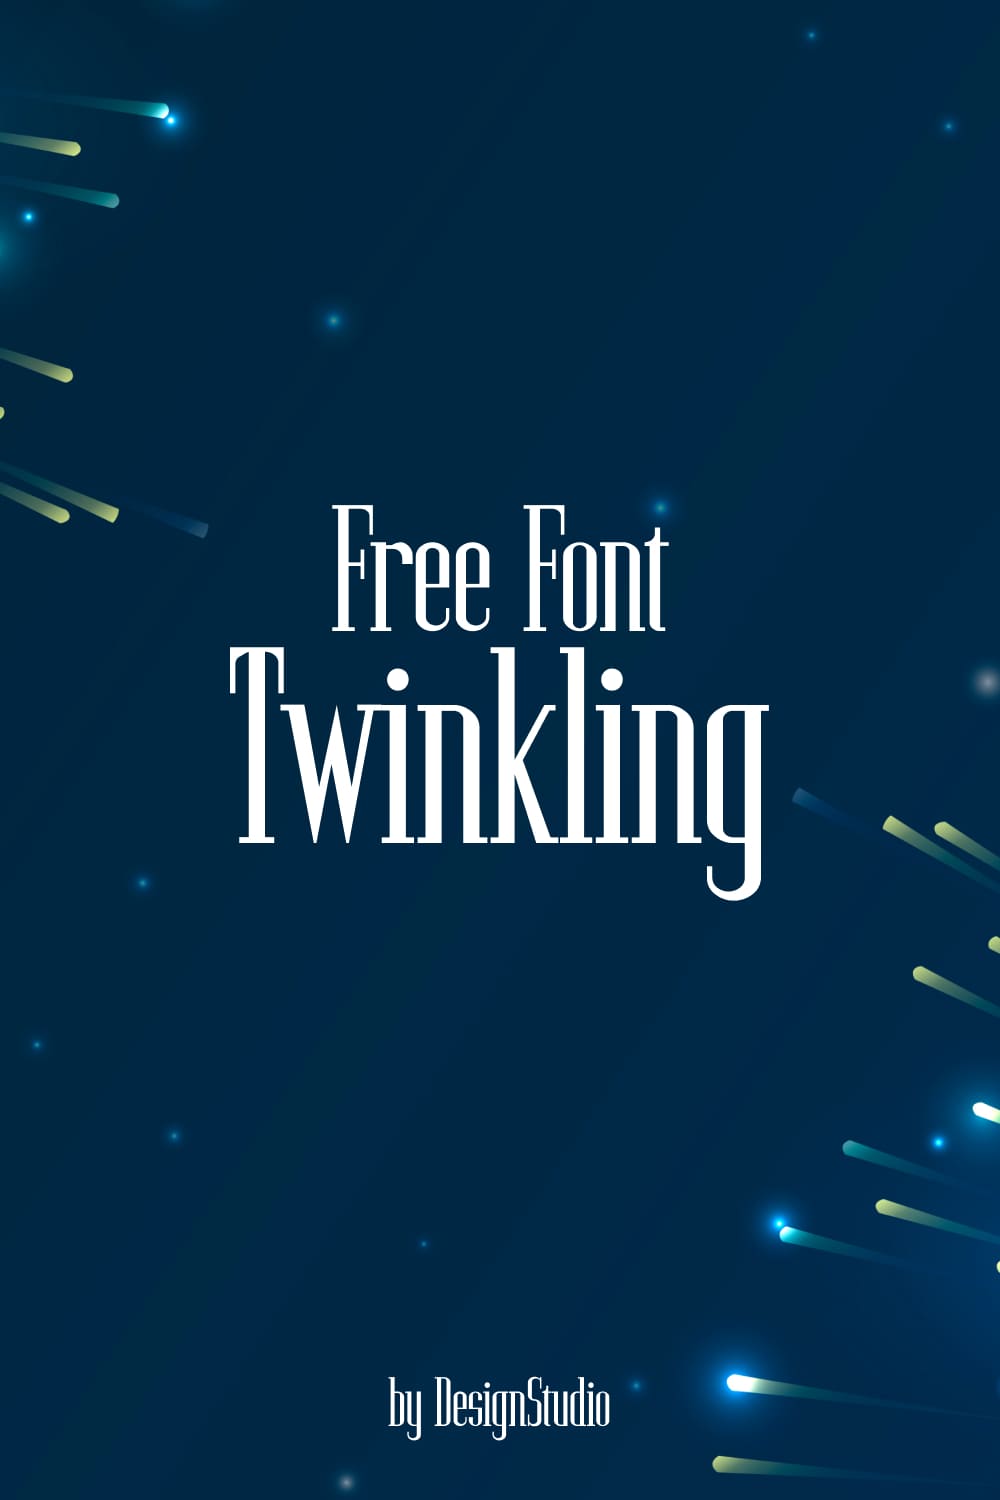 Twinkling Monospaced Serif Font Pinterest.